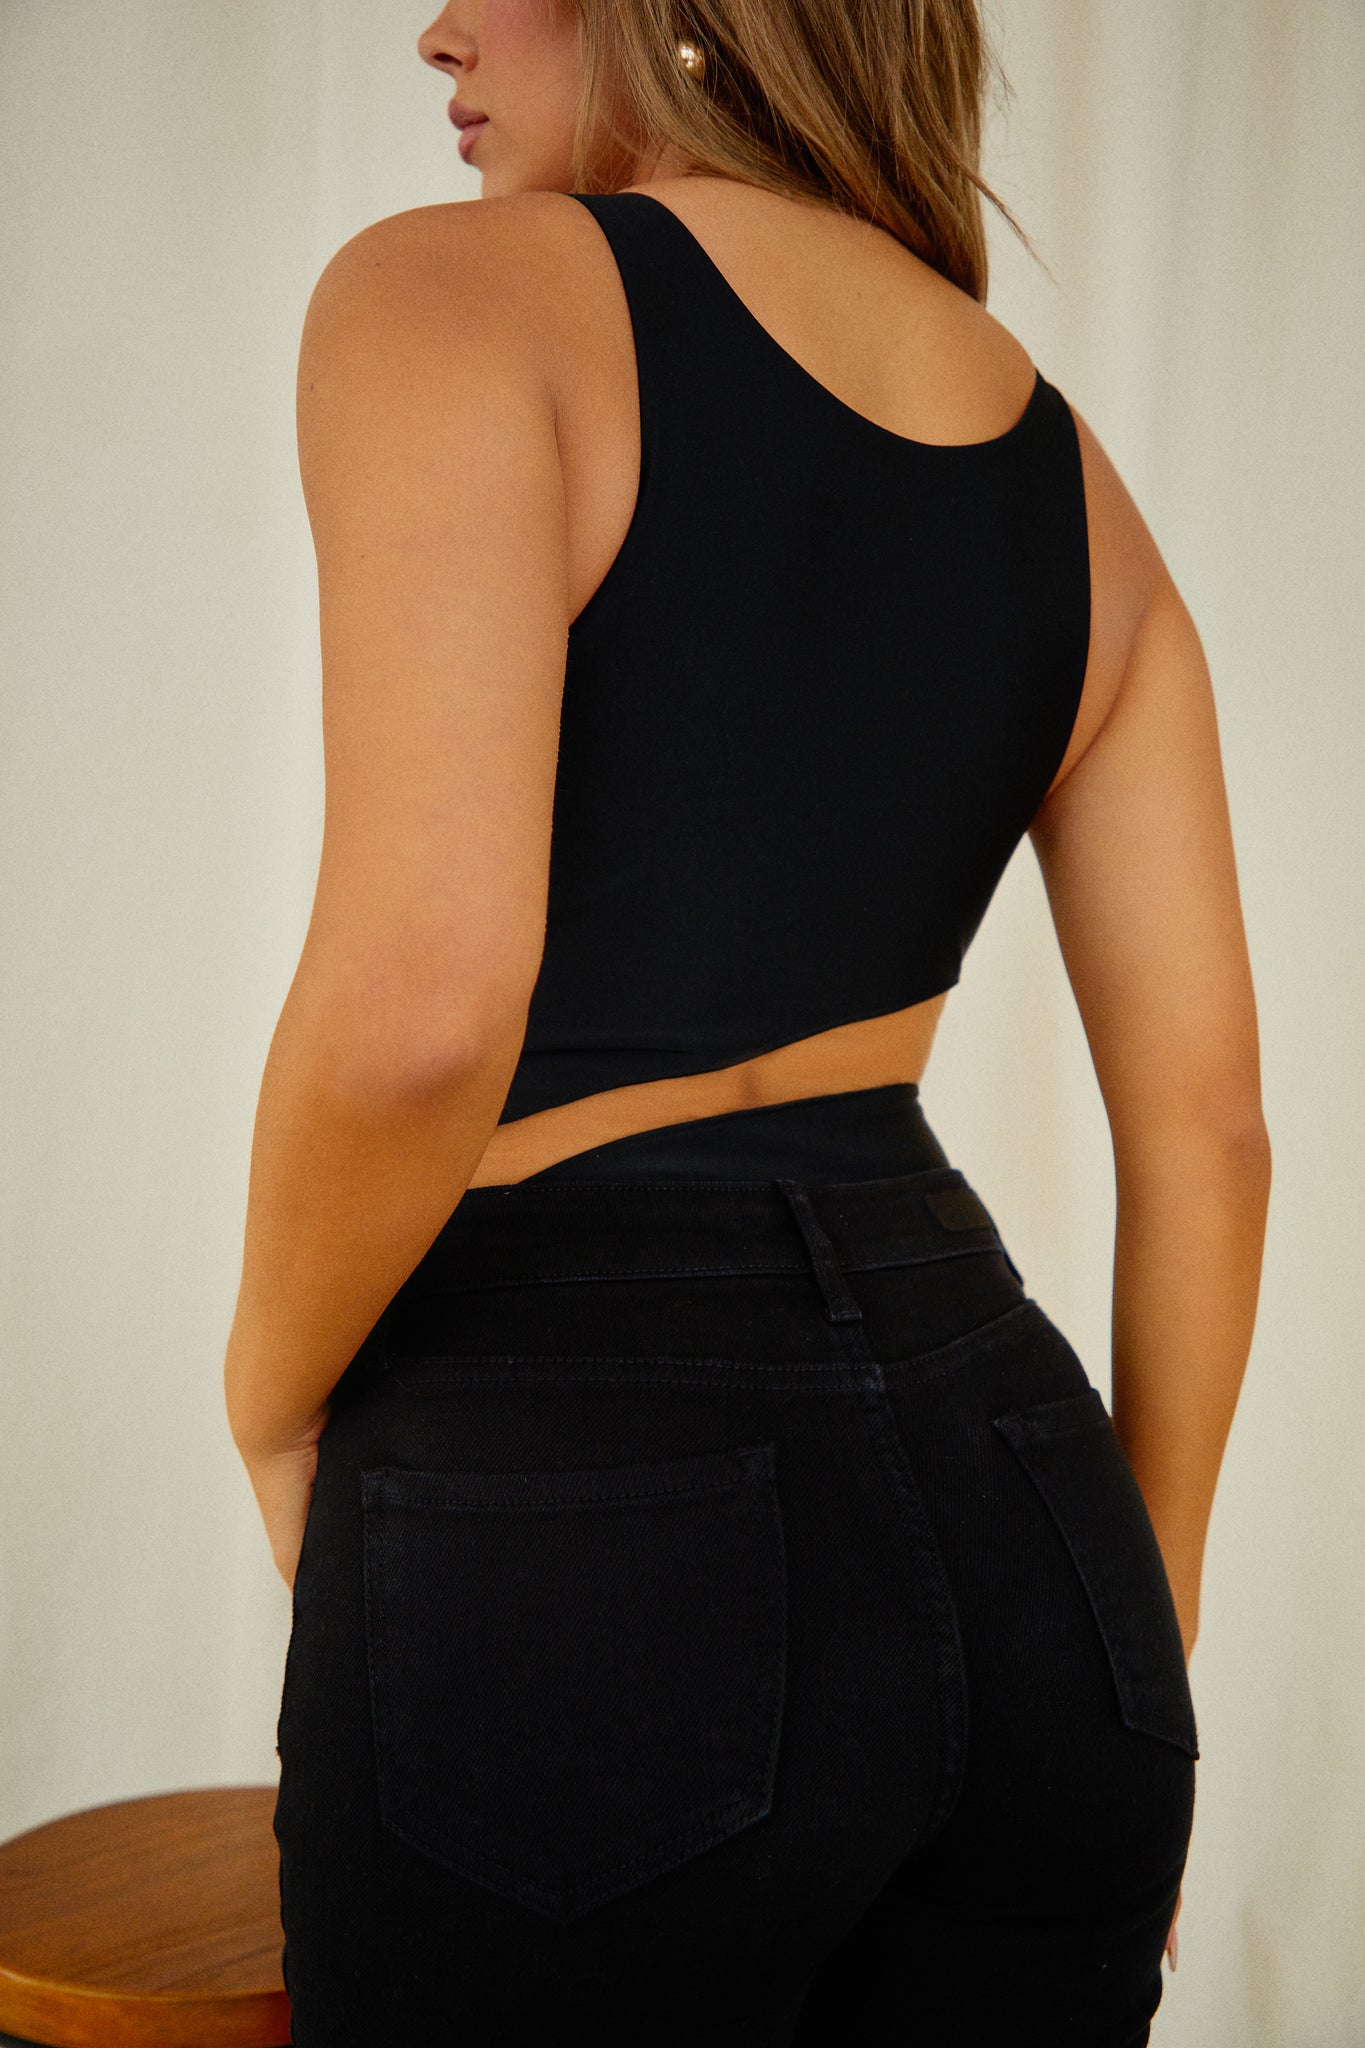 Kaylee Kollection Black Bodysuit Size Small MISS LOLA Tag NWT